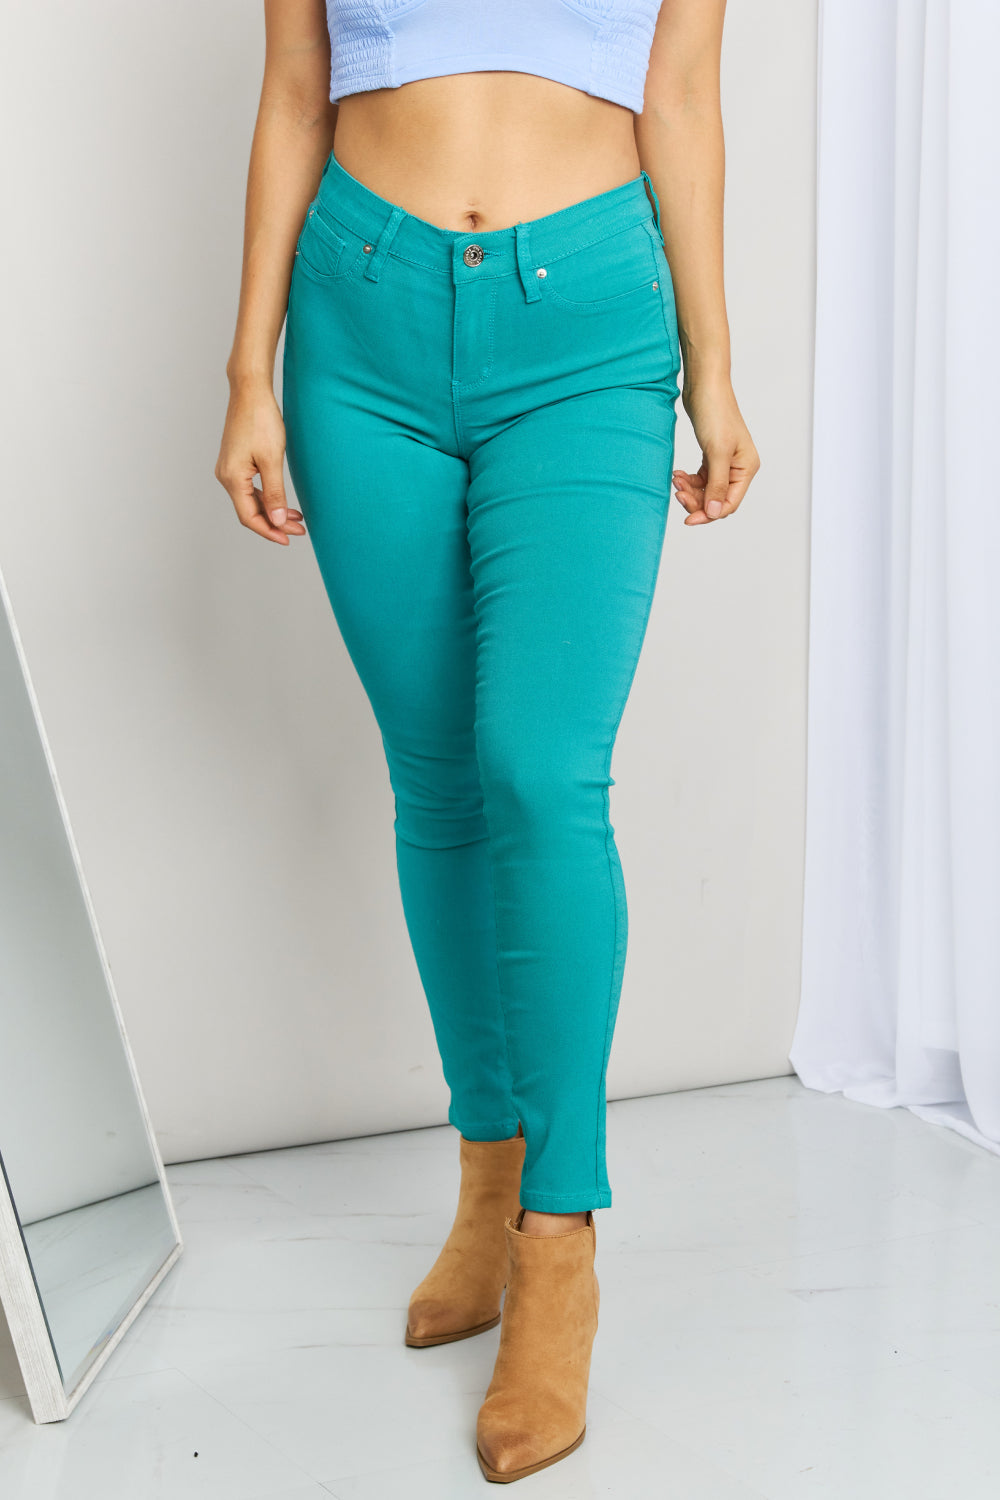 YMI Jeanswear, Kate Hyper-Stretch Full Size Mid-Rise Skinny Jeans in Sea Green